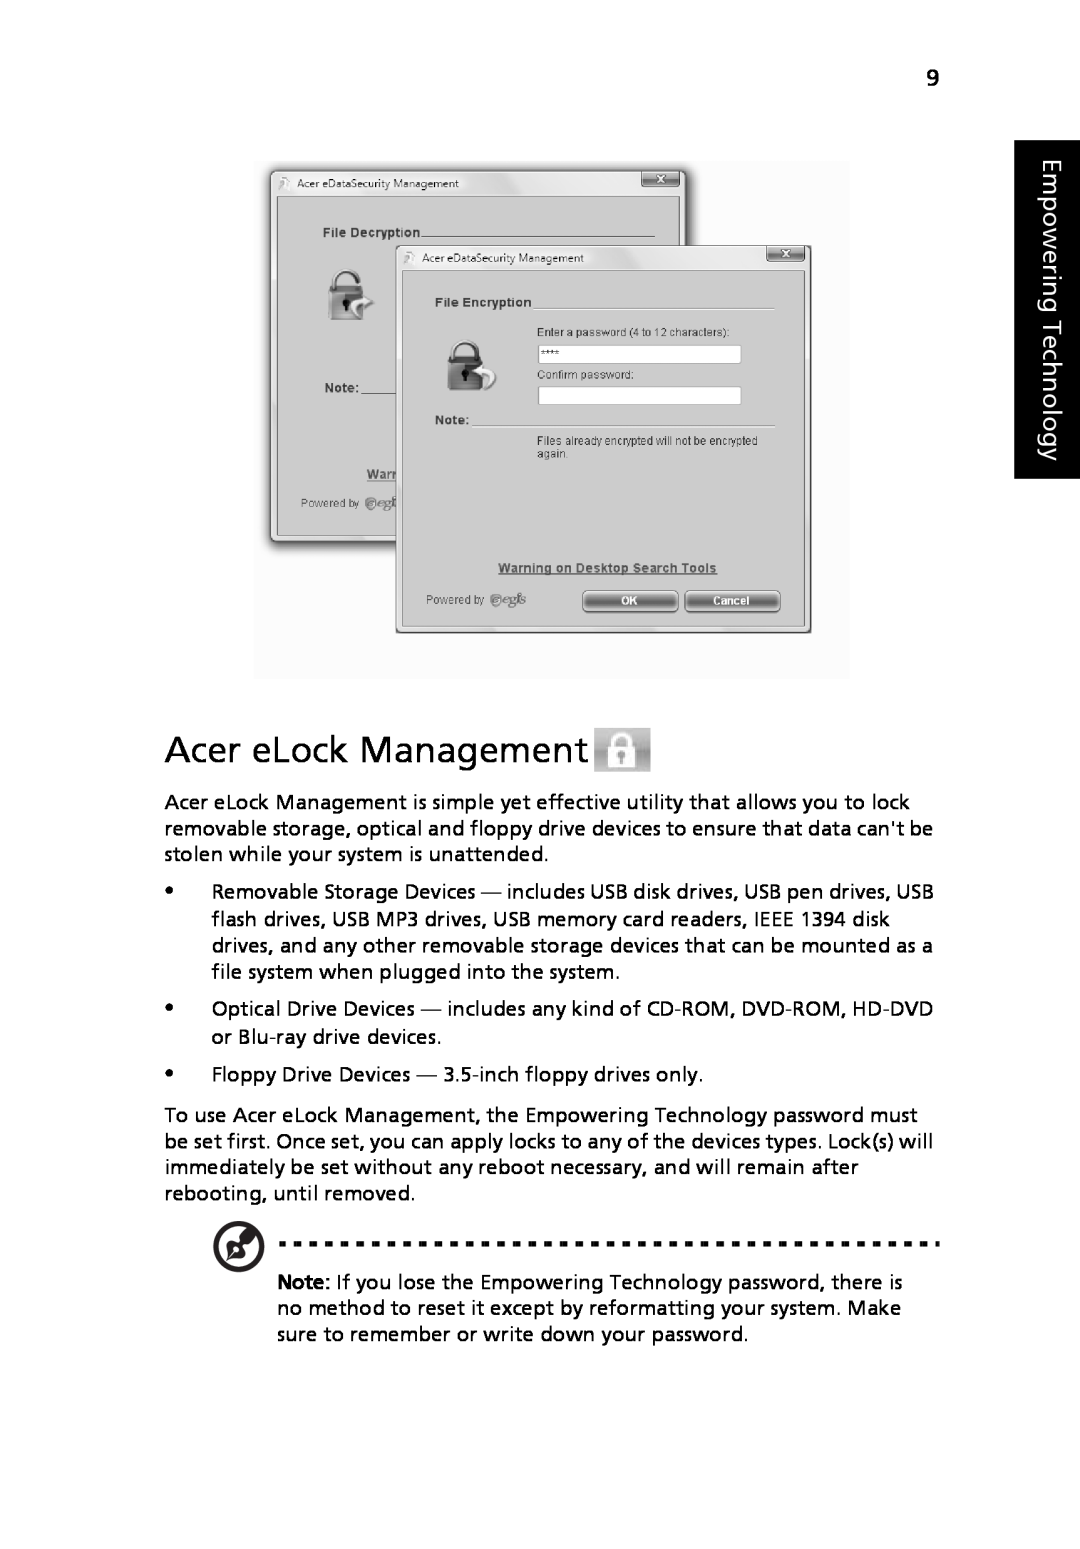 Acer 5520G, 5220 manual Acer eLock Management, Empowering Technology 